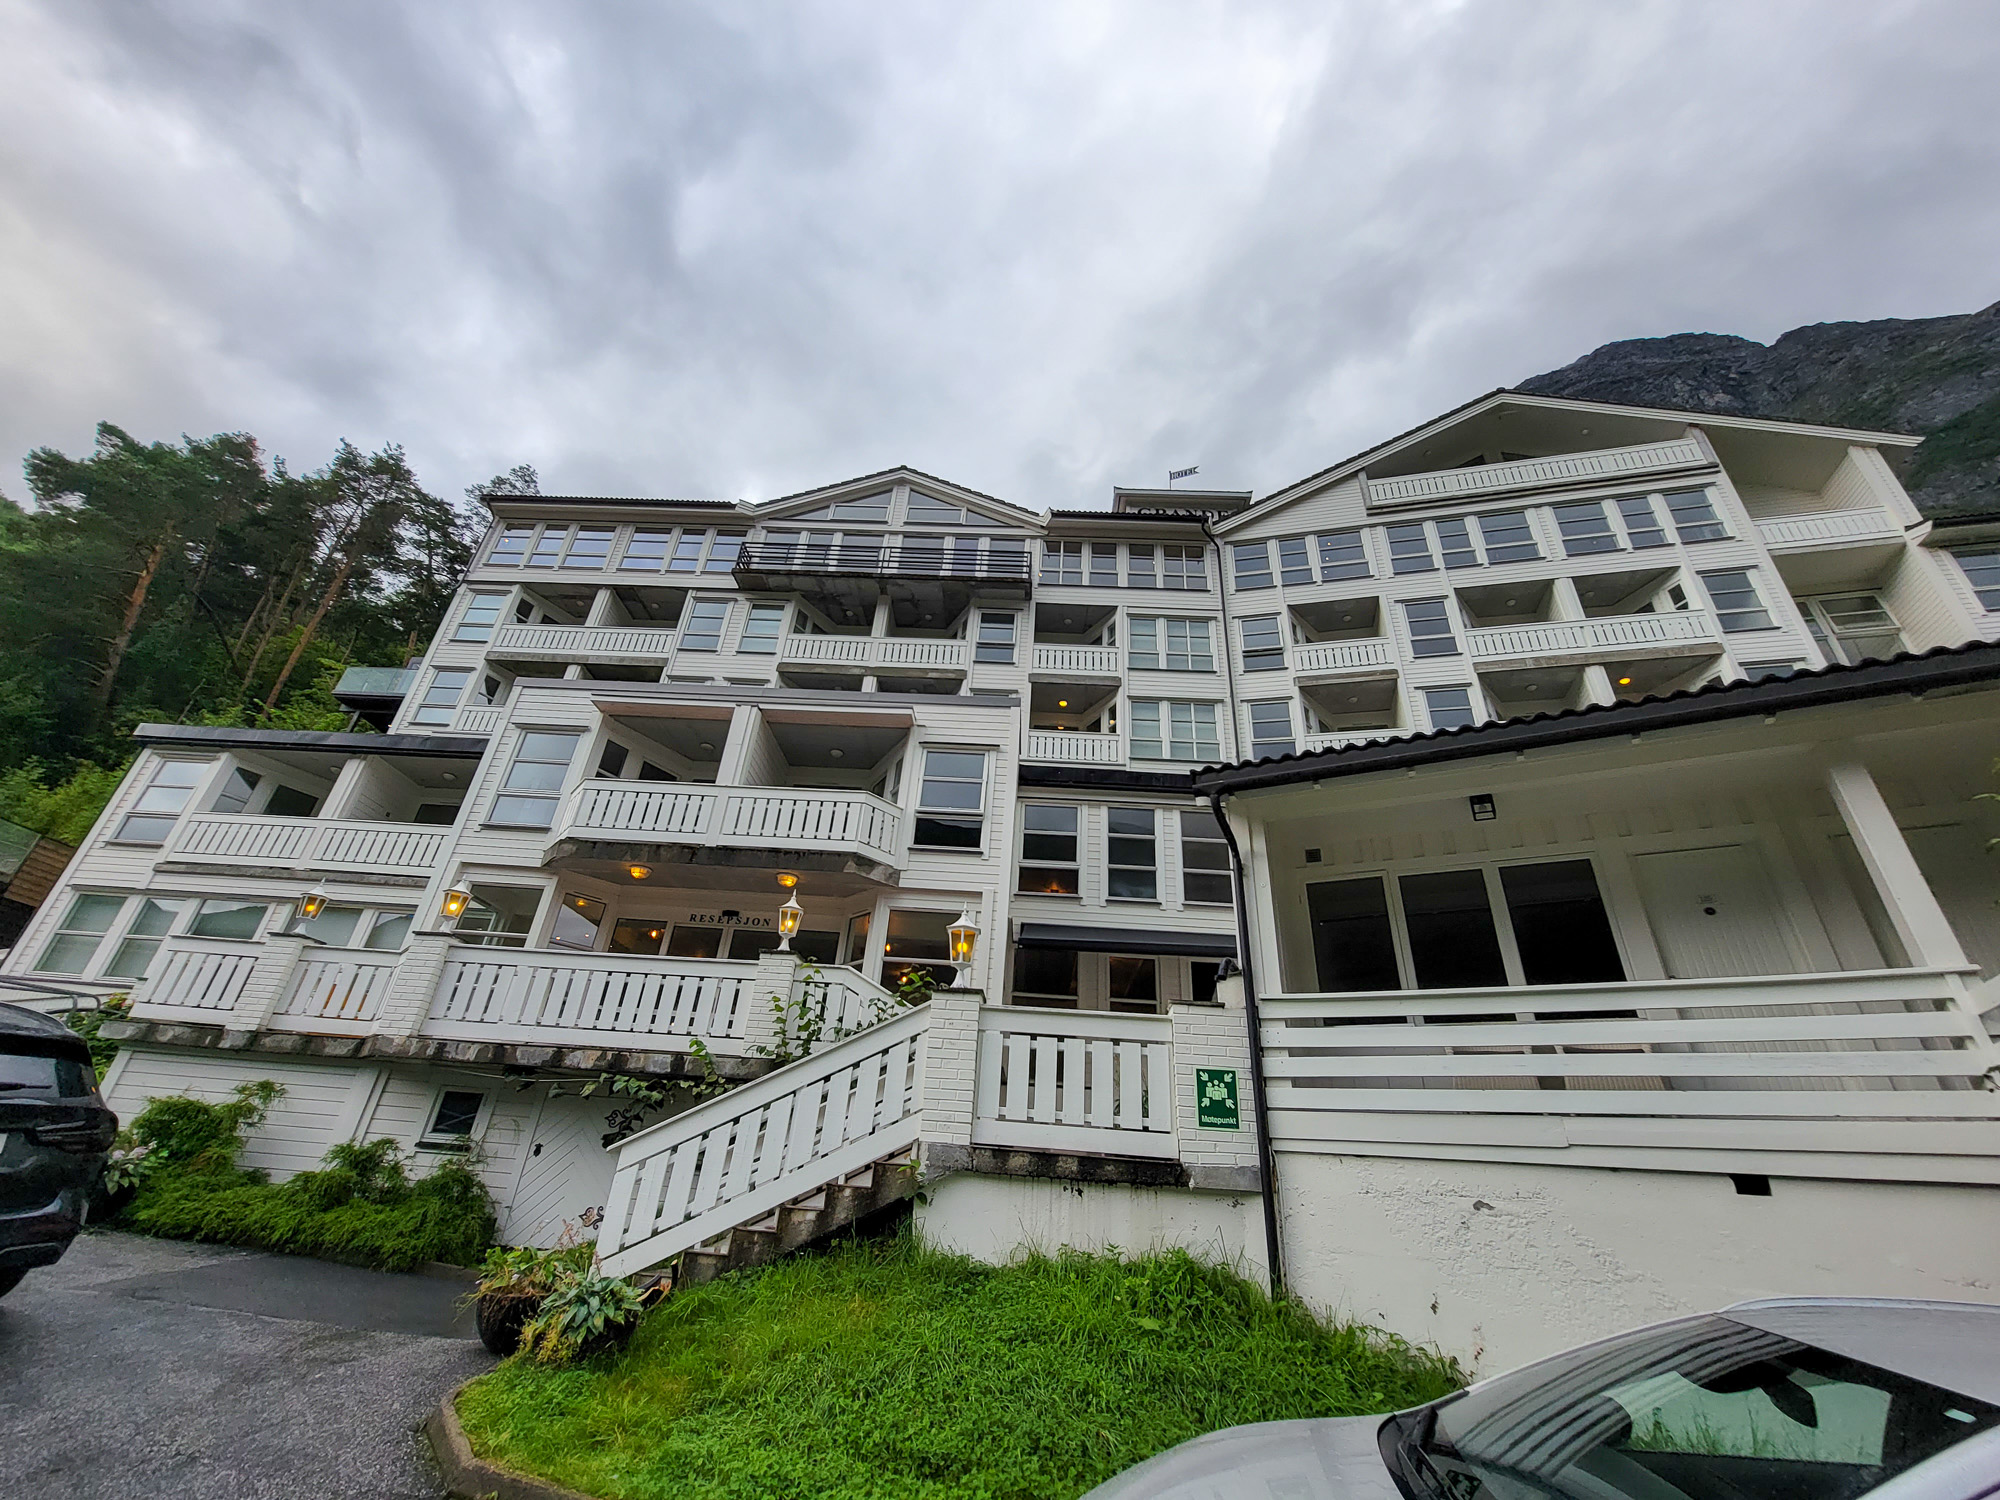 Grande Fjord Hotel